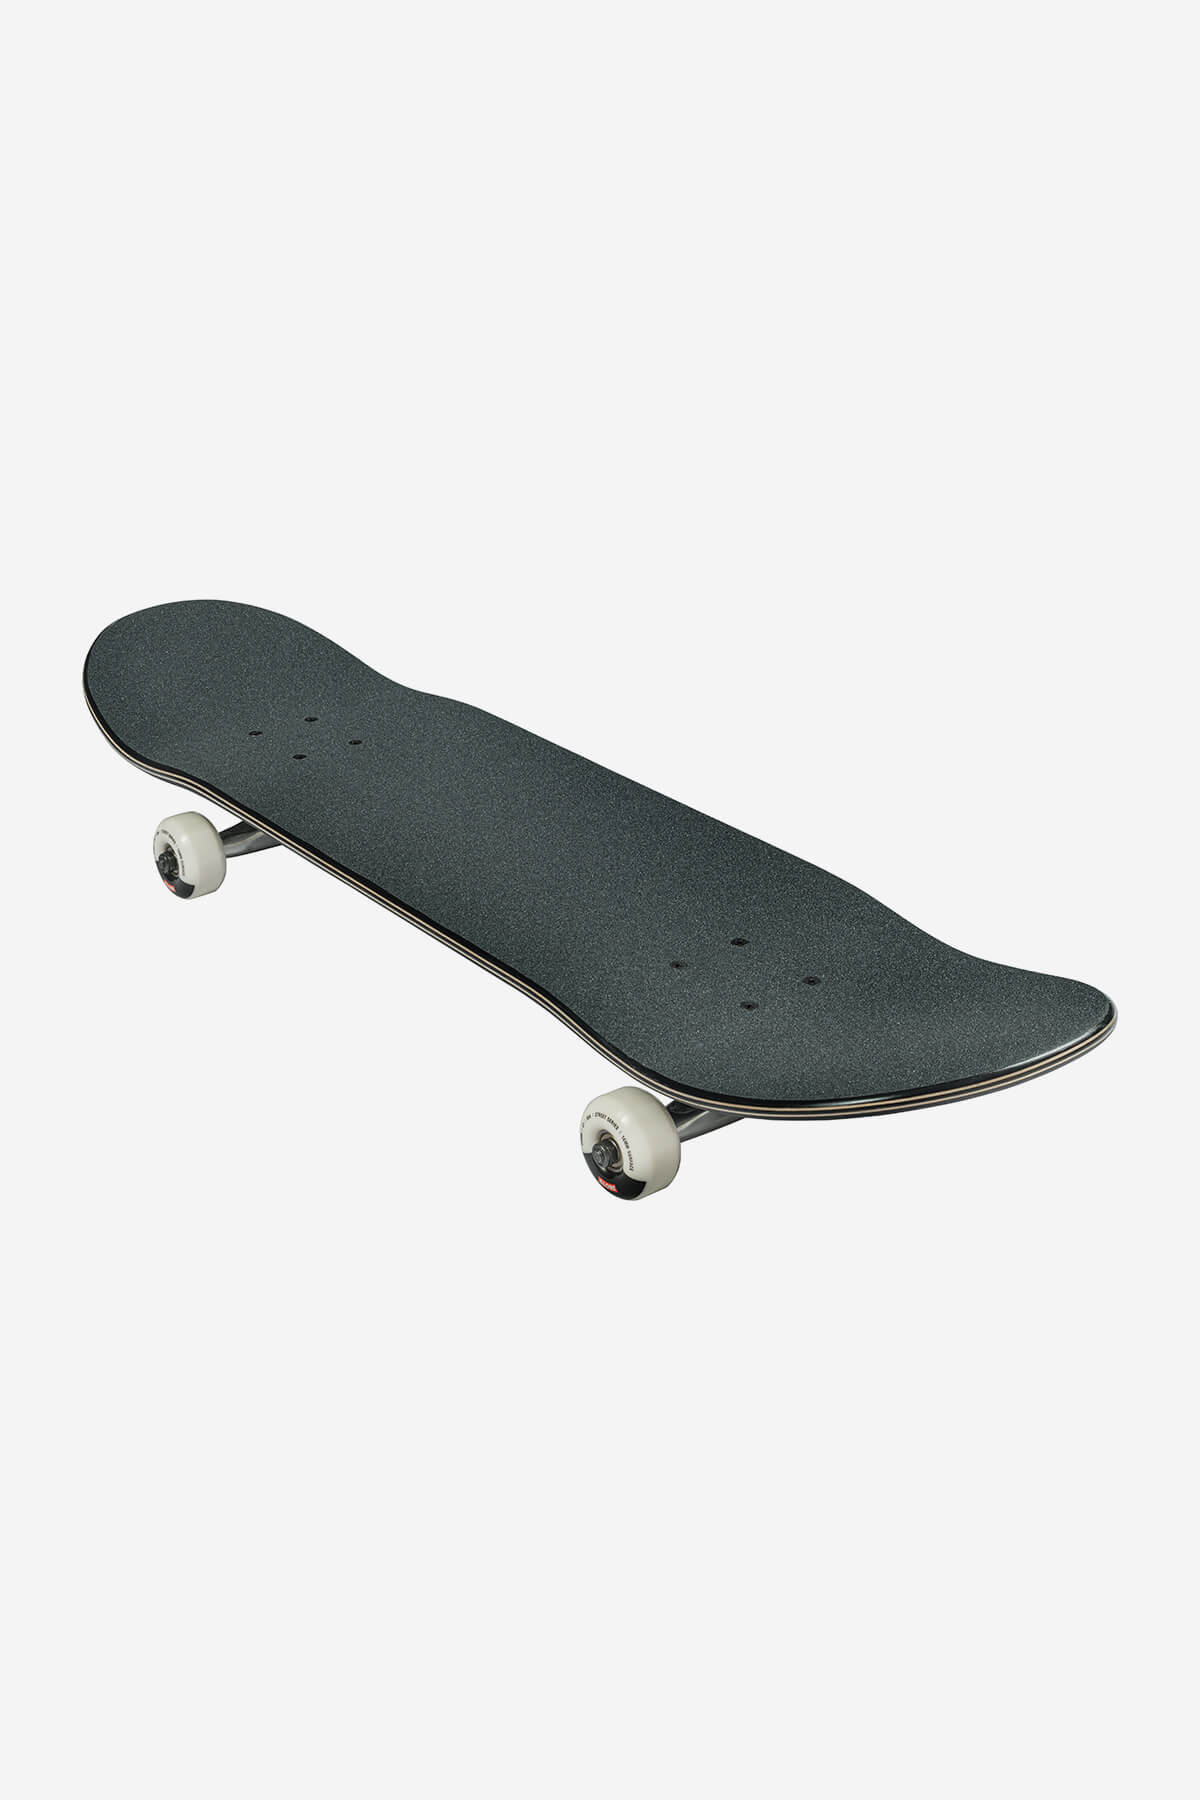 Globe - G1 Argo - Schwarz/Camo - 8.125" Komplett Skateboard